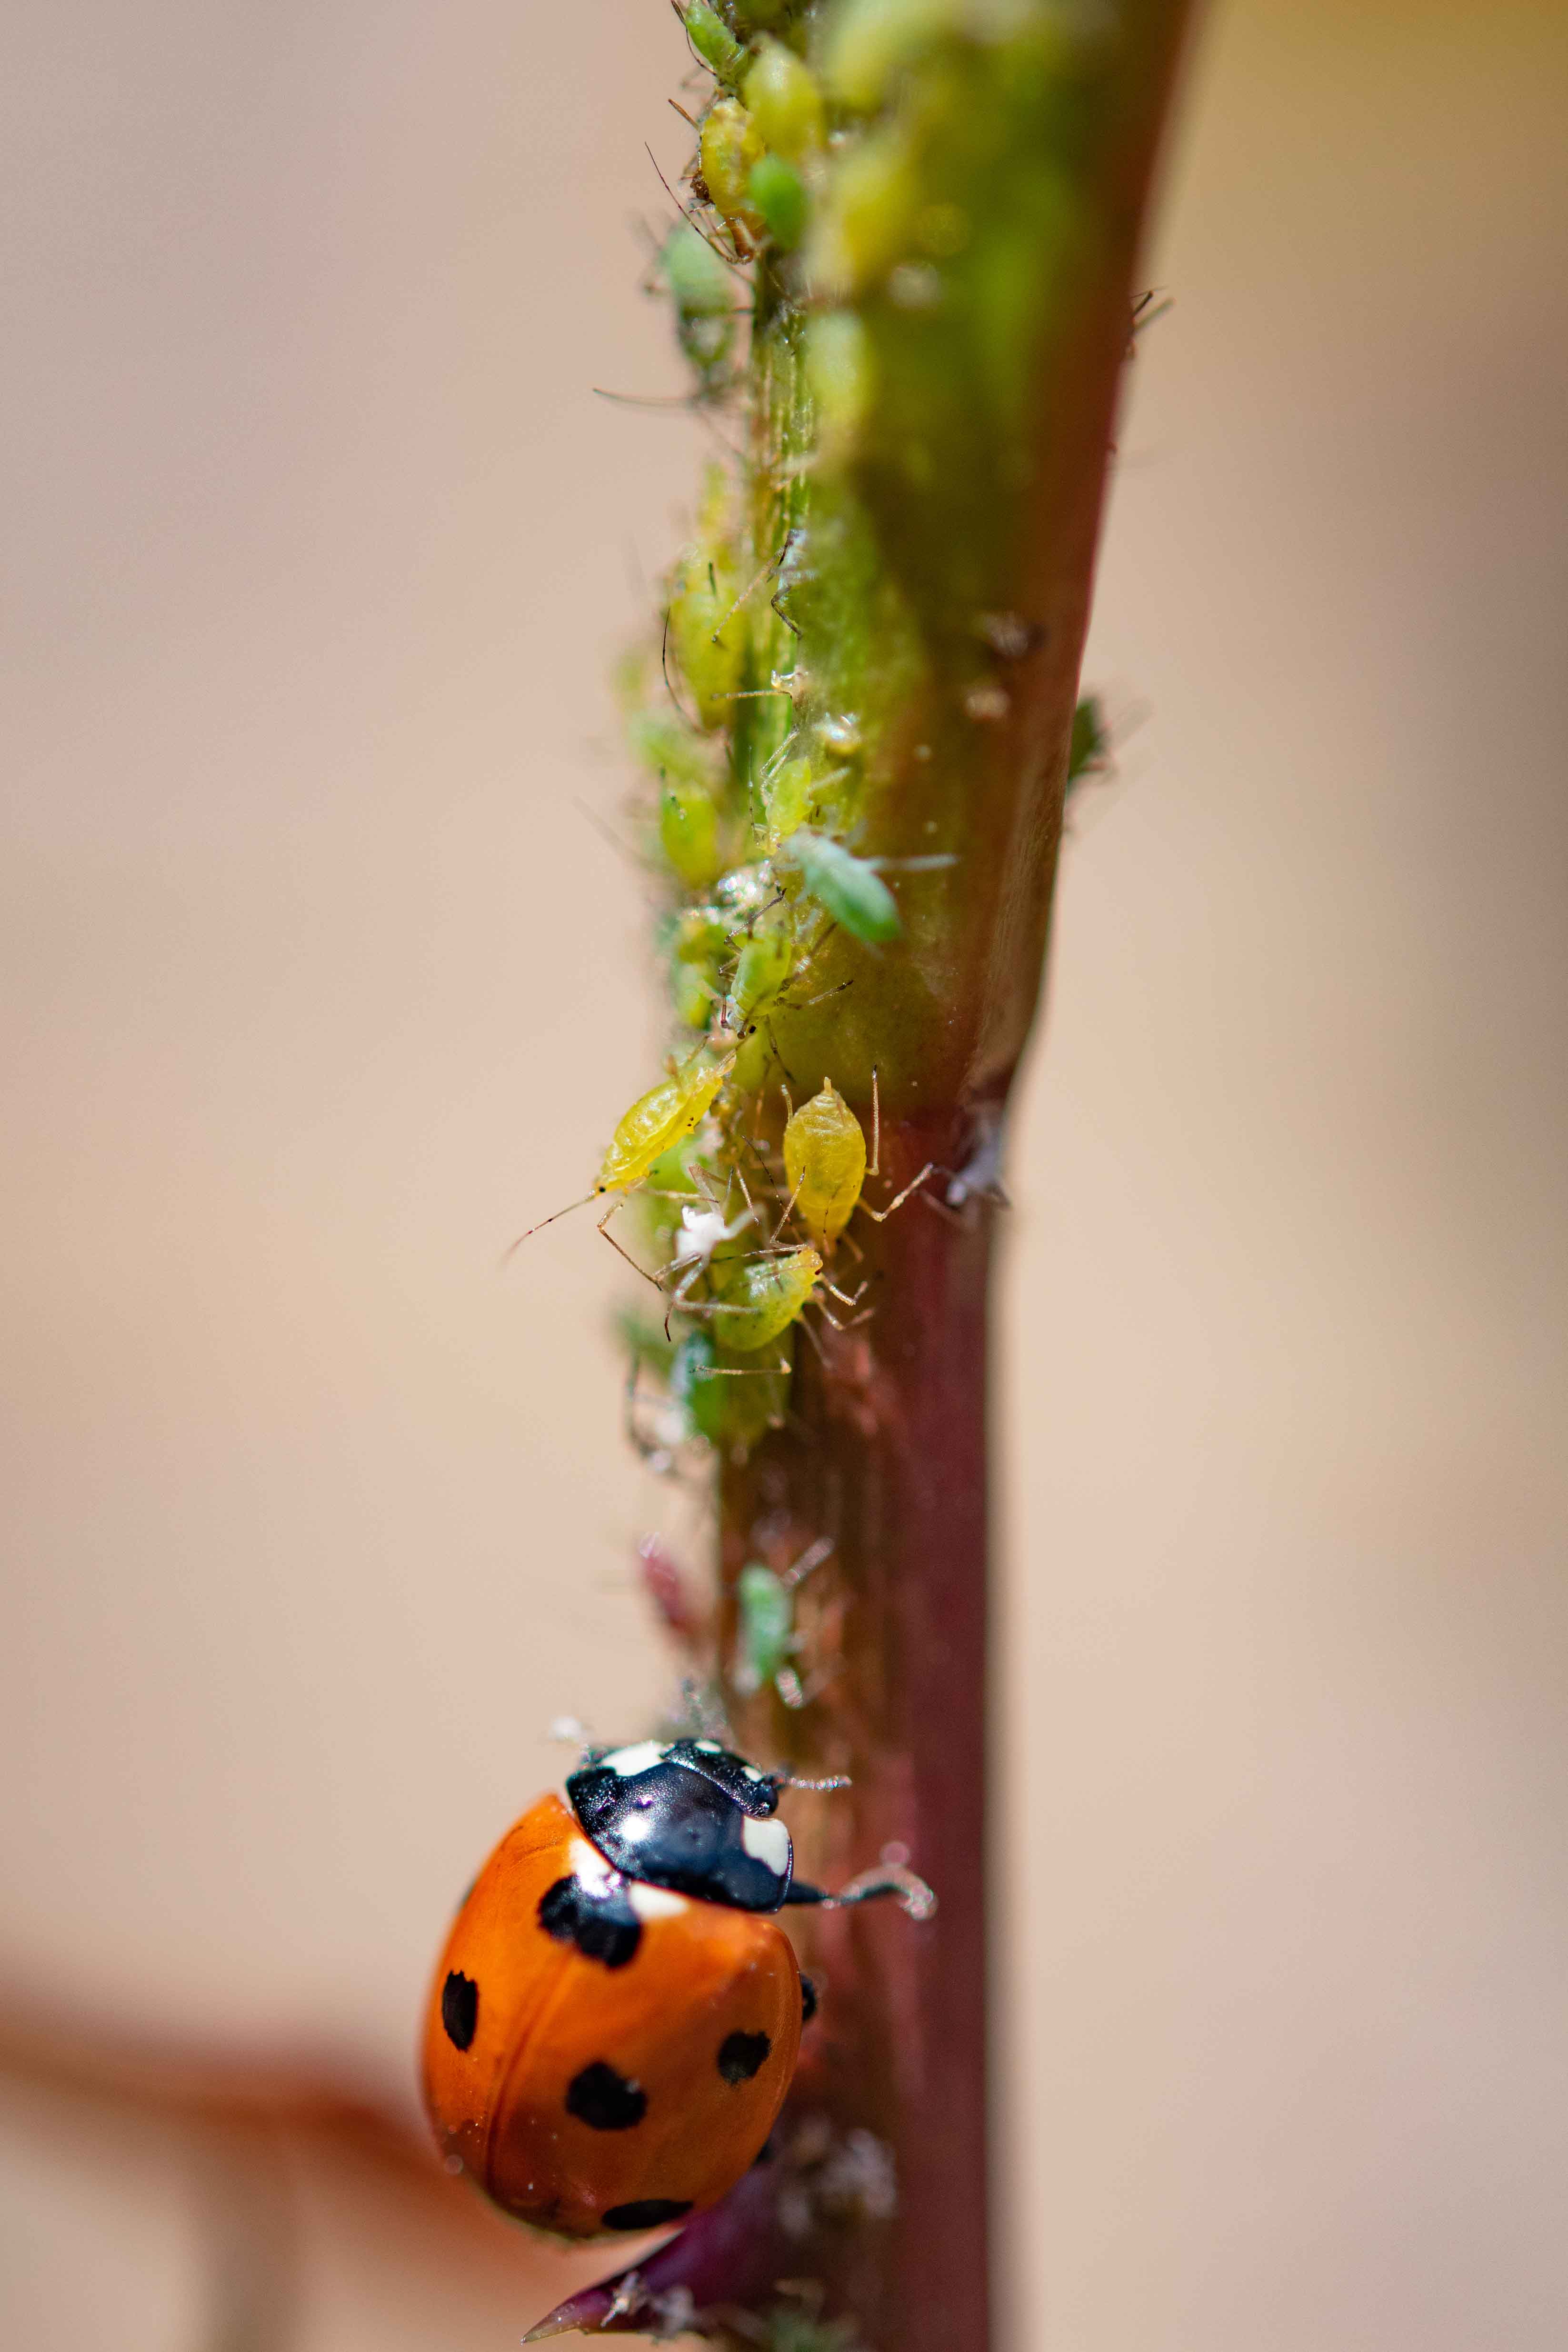 Ladybird